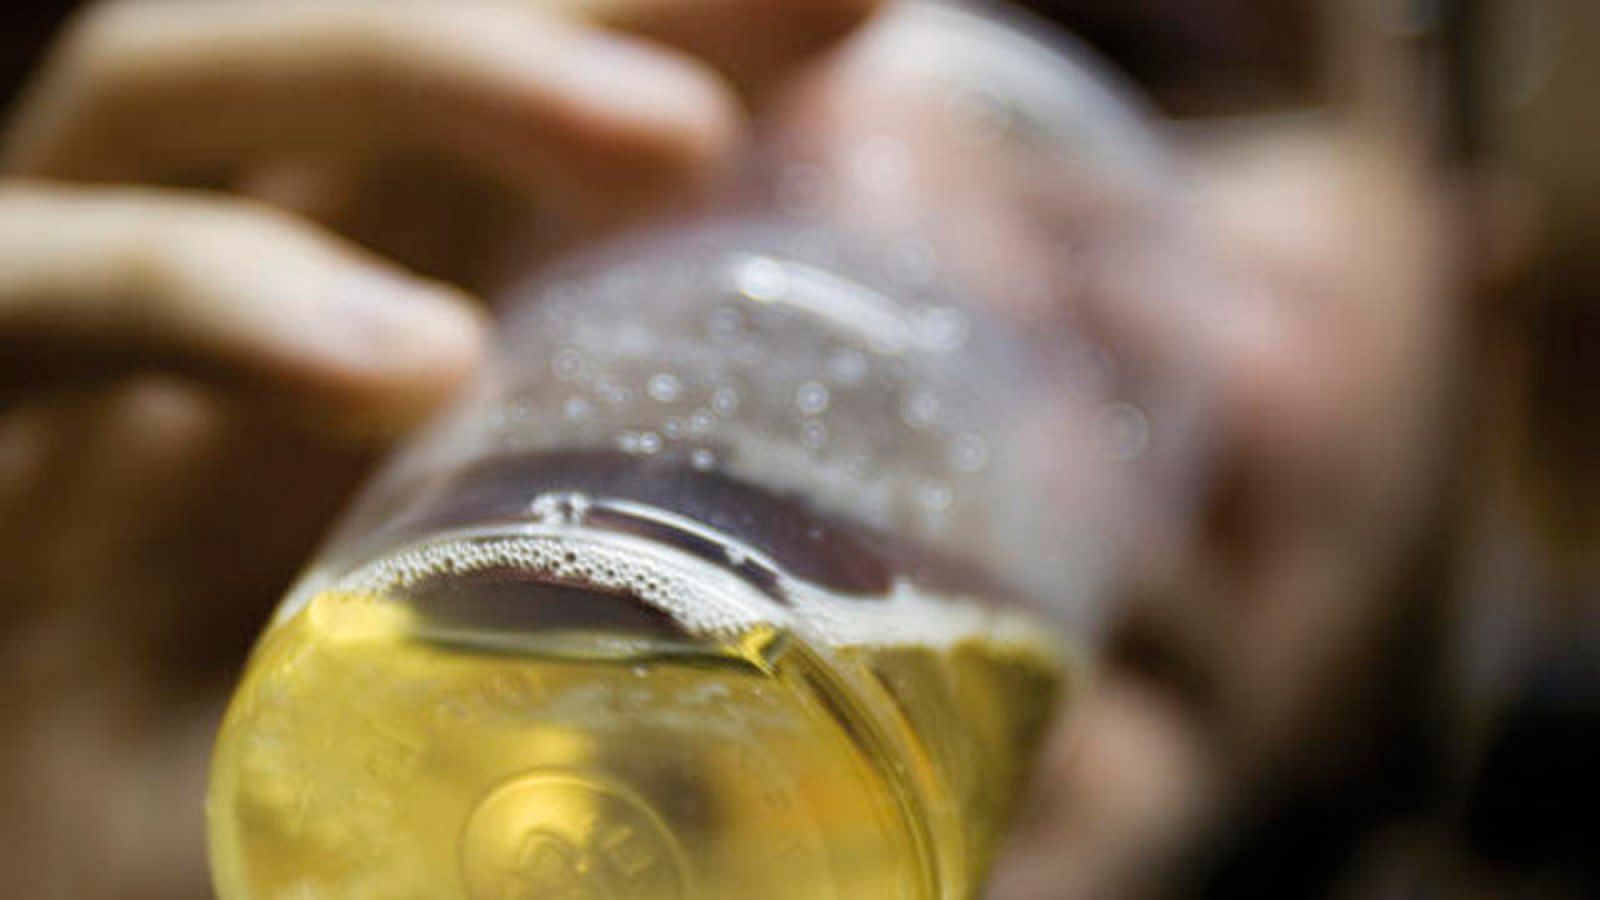 Consumir alcohol, aun siendo de forma moderada, aumenta el riesgo de padecer cáncer